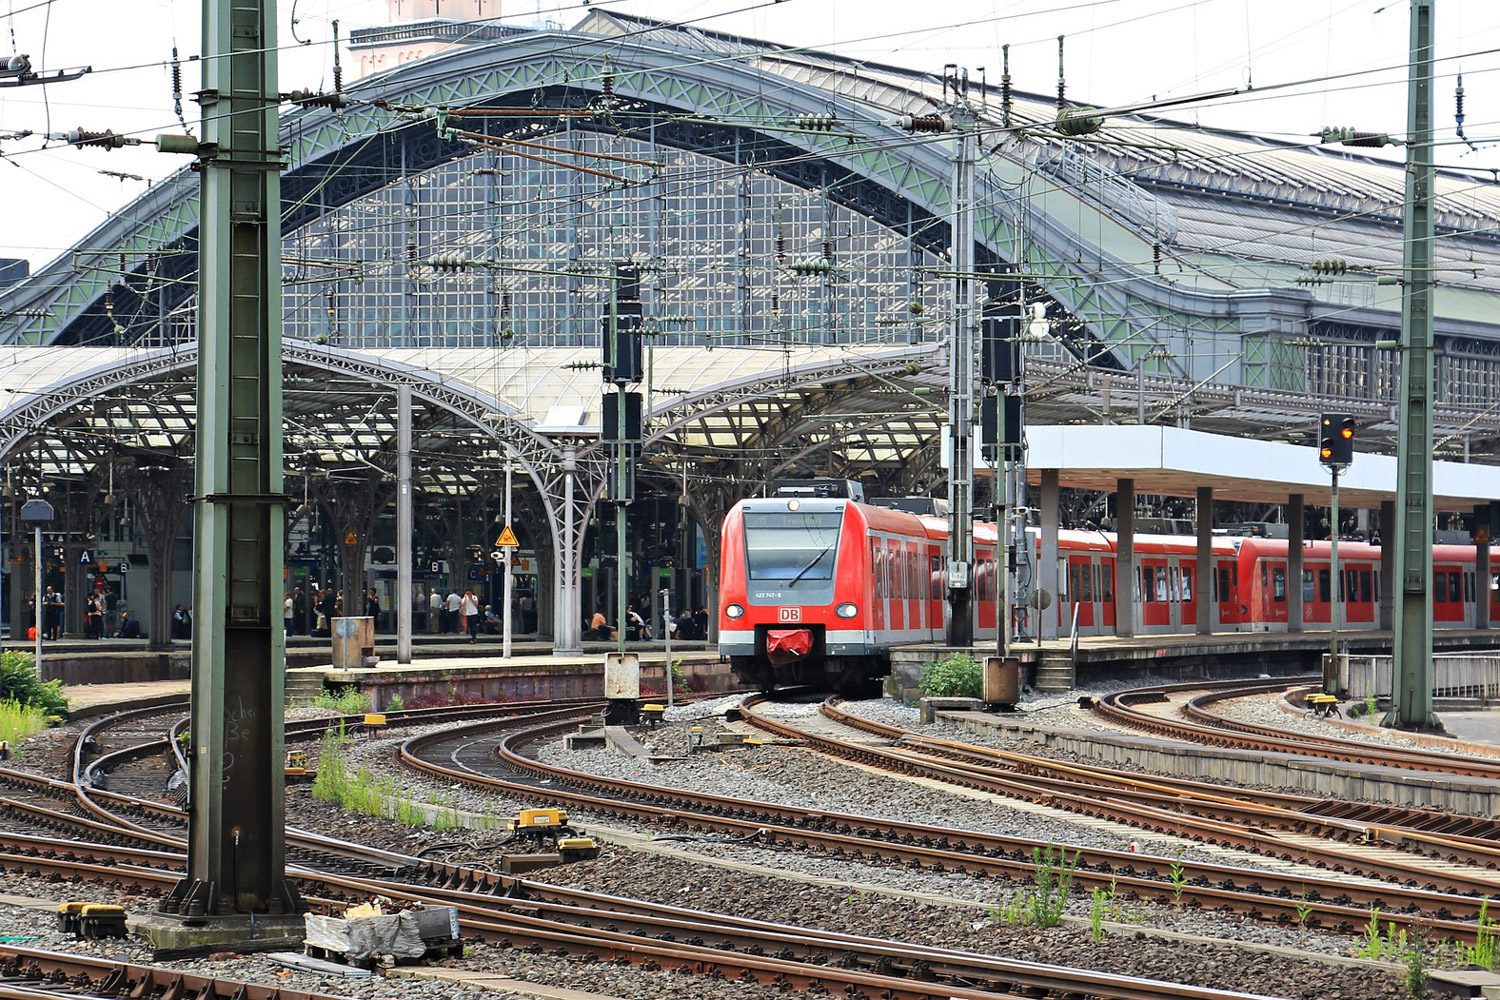 Keulen station